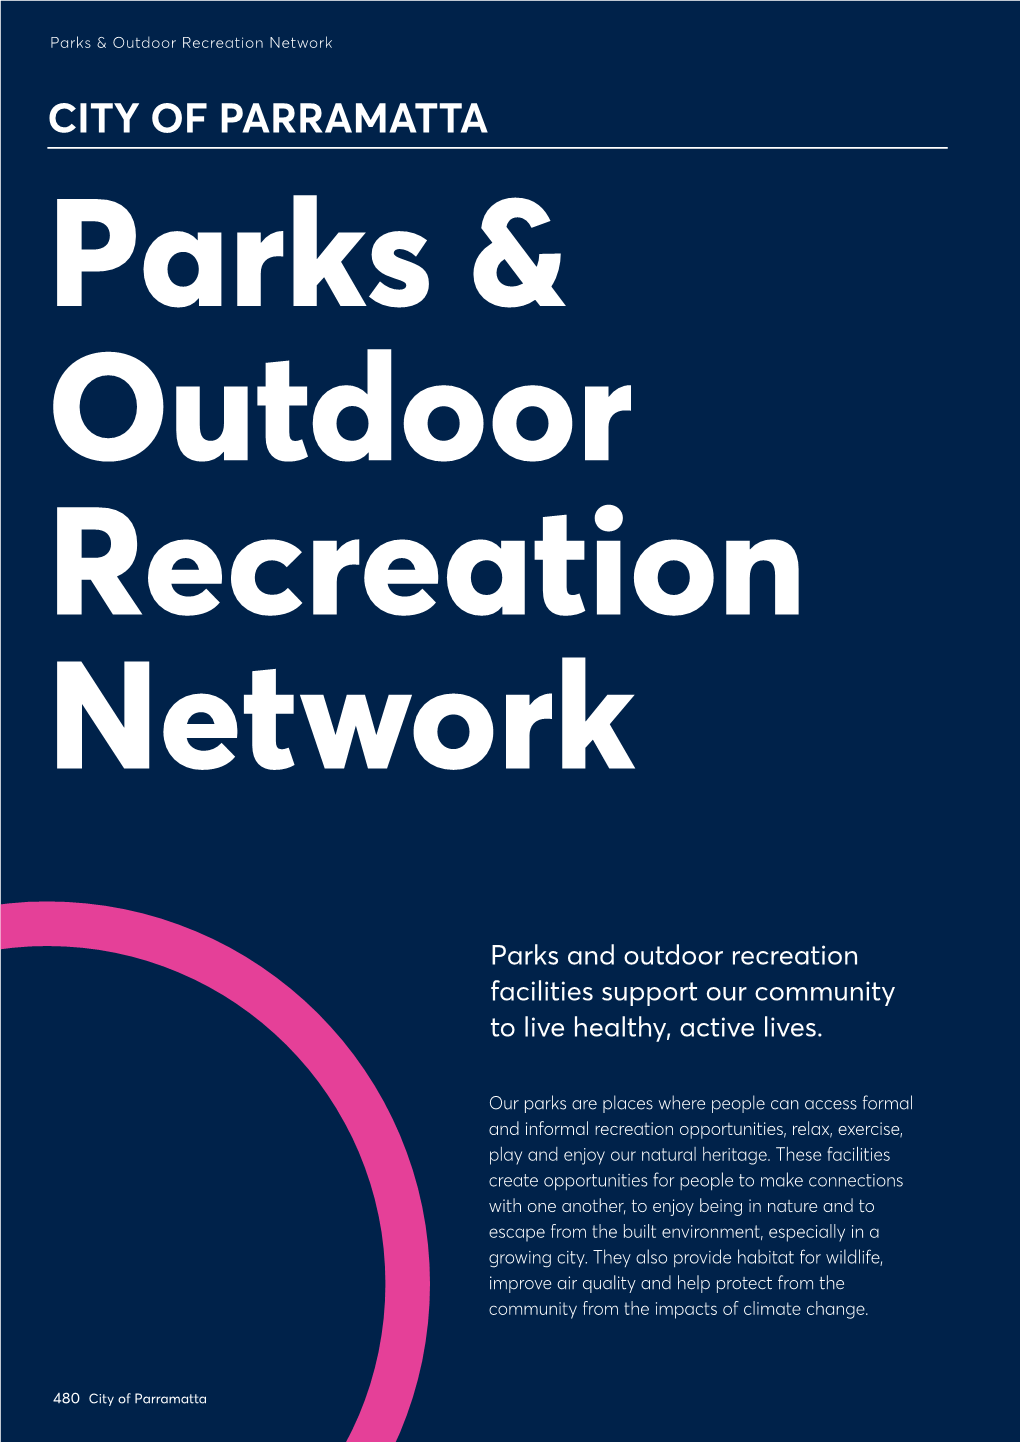 CITY of PARRAMATTA Parks & Outdoor Recreation Network